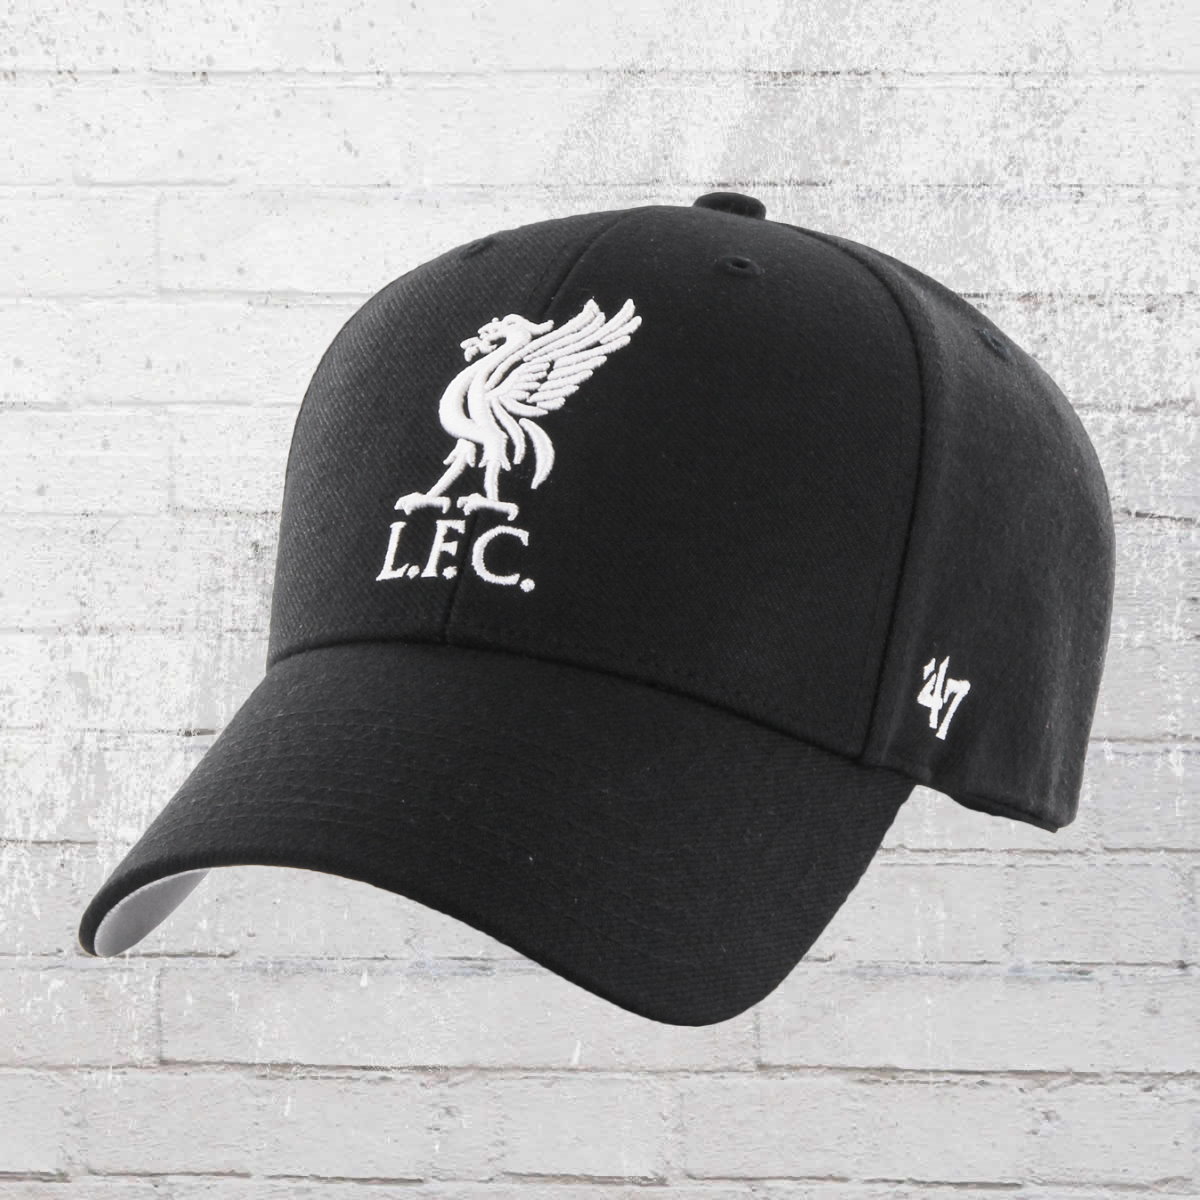 Order now | 47 Brands Liverpool Football Club Hat Cap black white